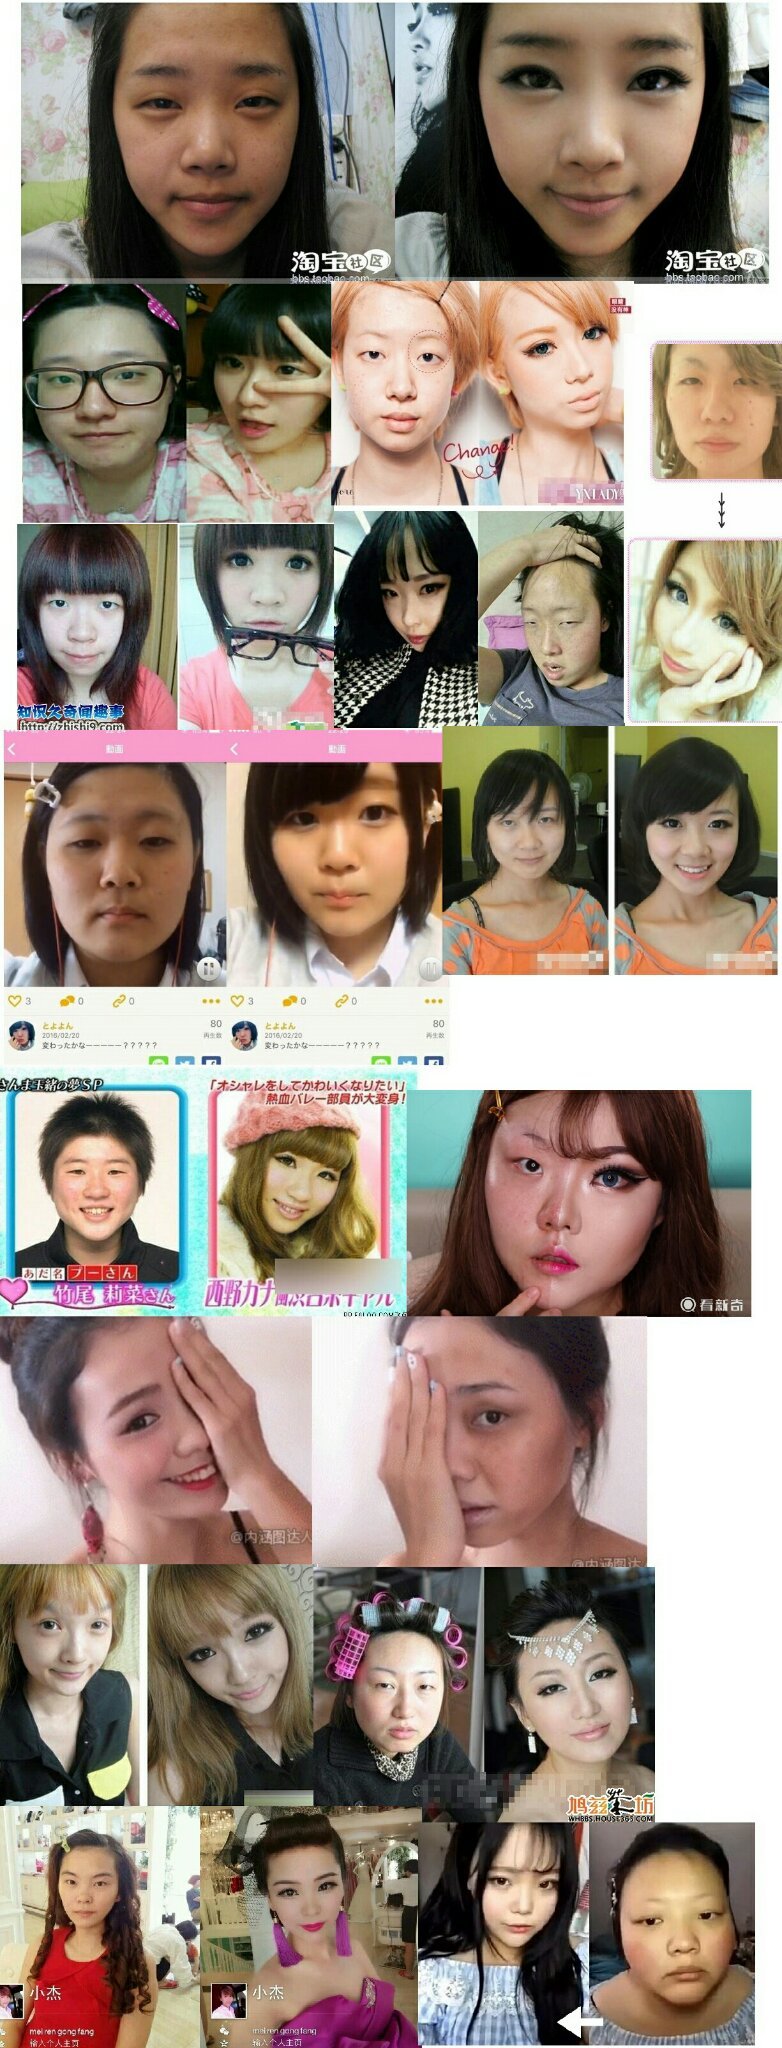 When asian girls remove their makeup - meme